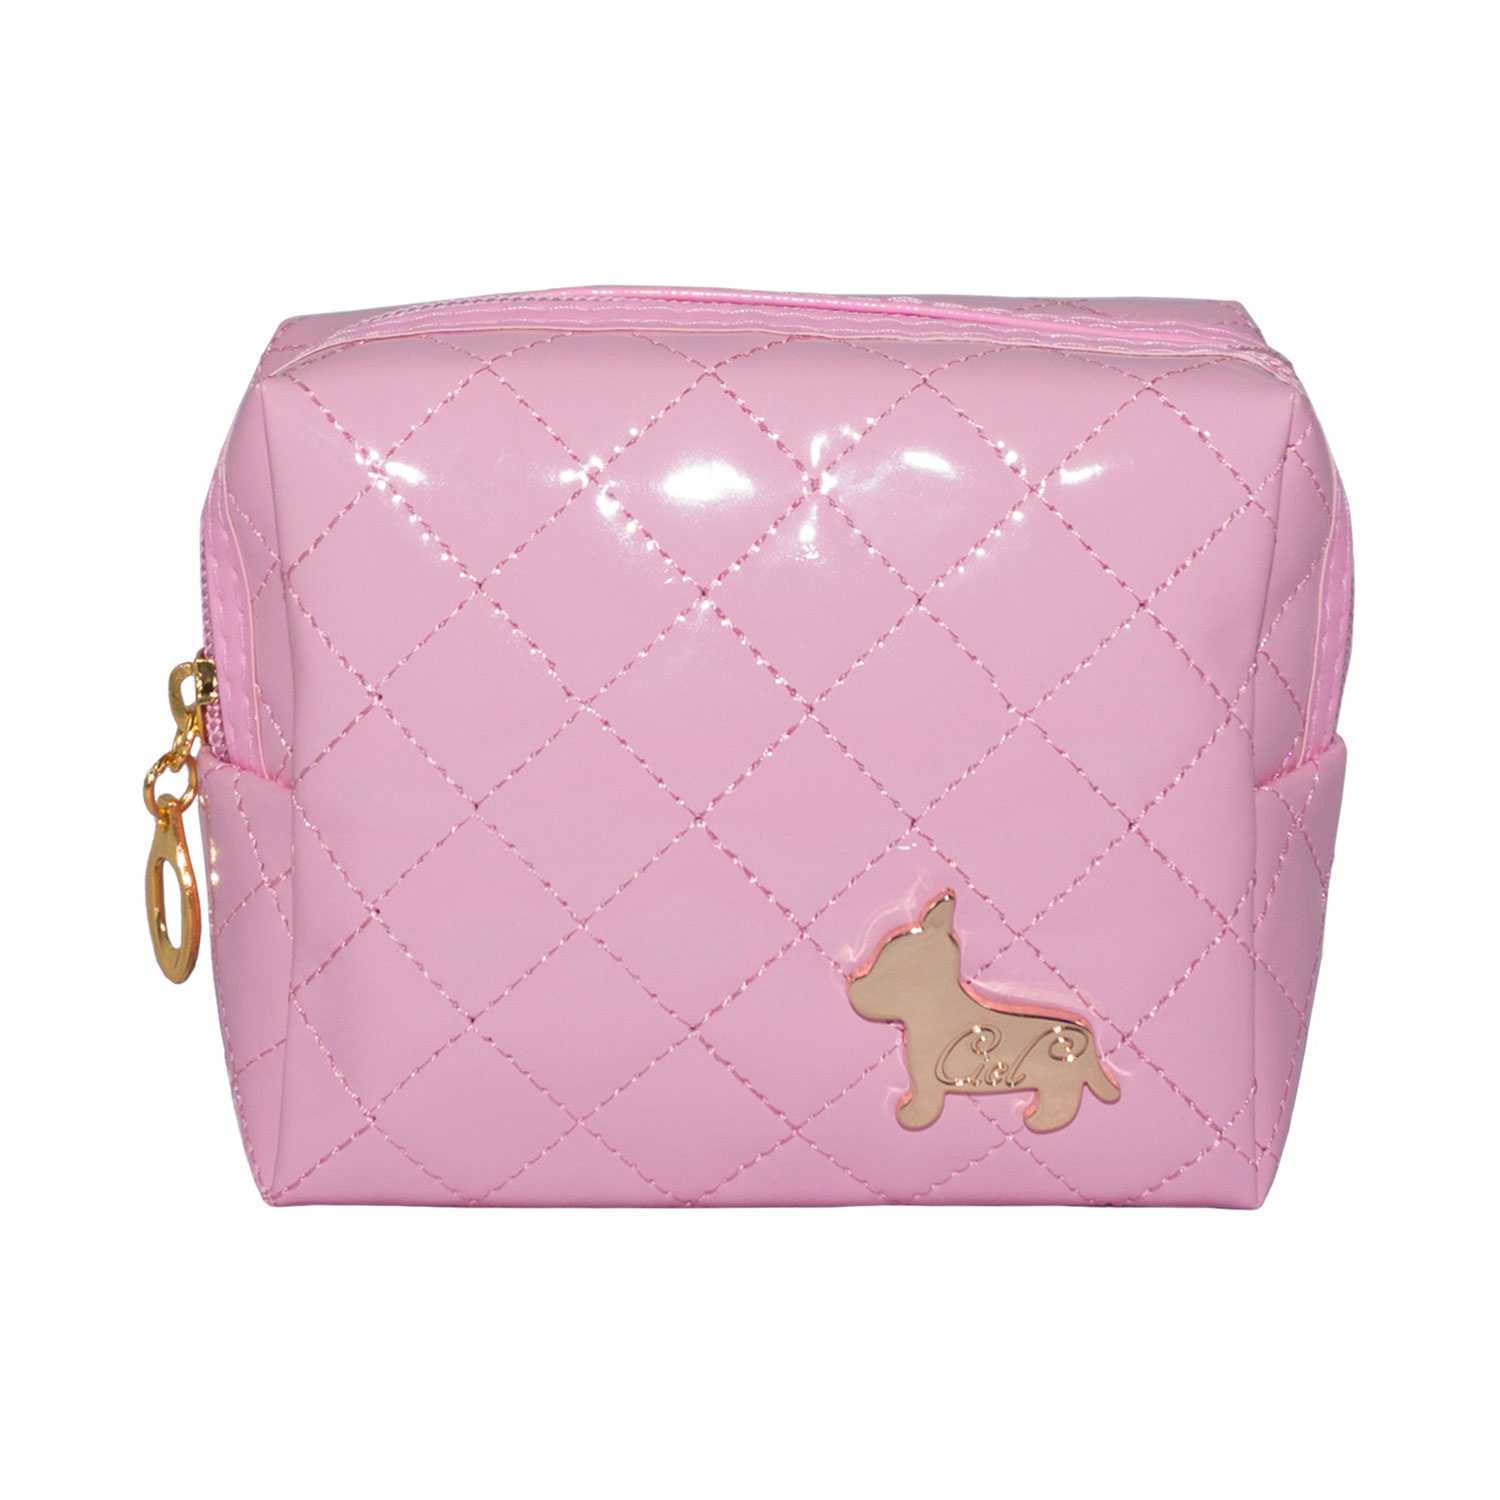 Shiny Rectangular Shape Cosmetic Pouch Bag - Light Pink - Zestique